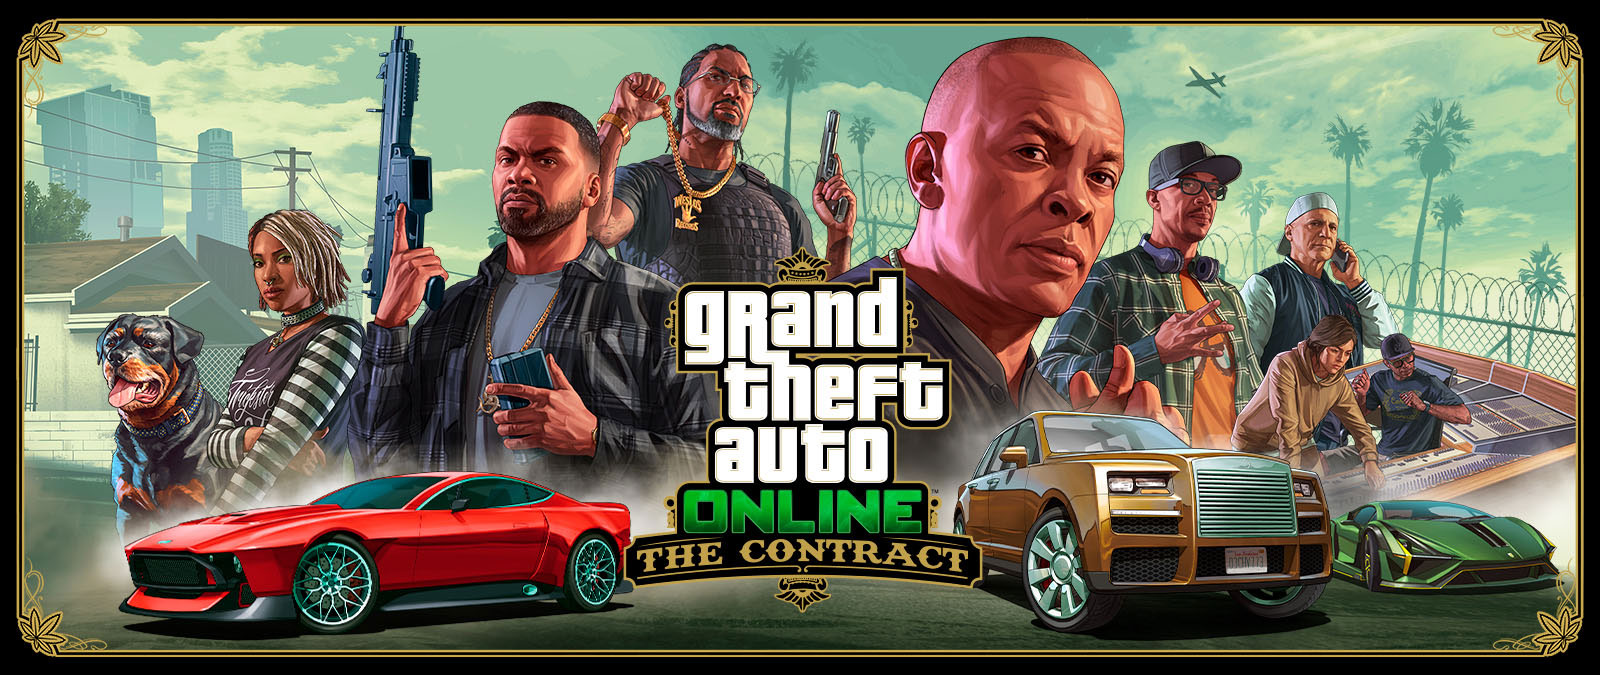 Grand Theft Auto Online, The Contract, Ο Franklin, επτά άλλοι φίλοι και ο Chop the dog στη σειρά πίσω από τρία εξωτικά αυτοκίνητα. 